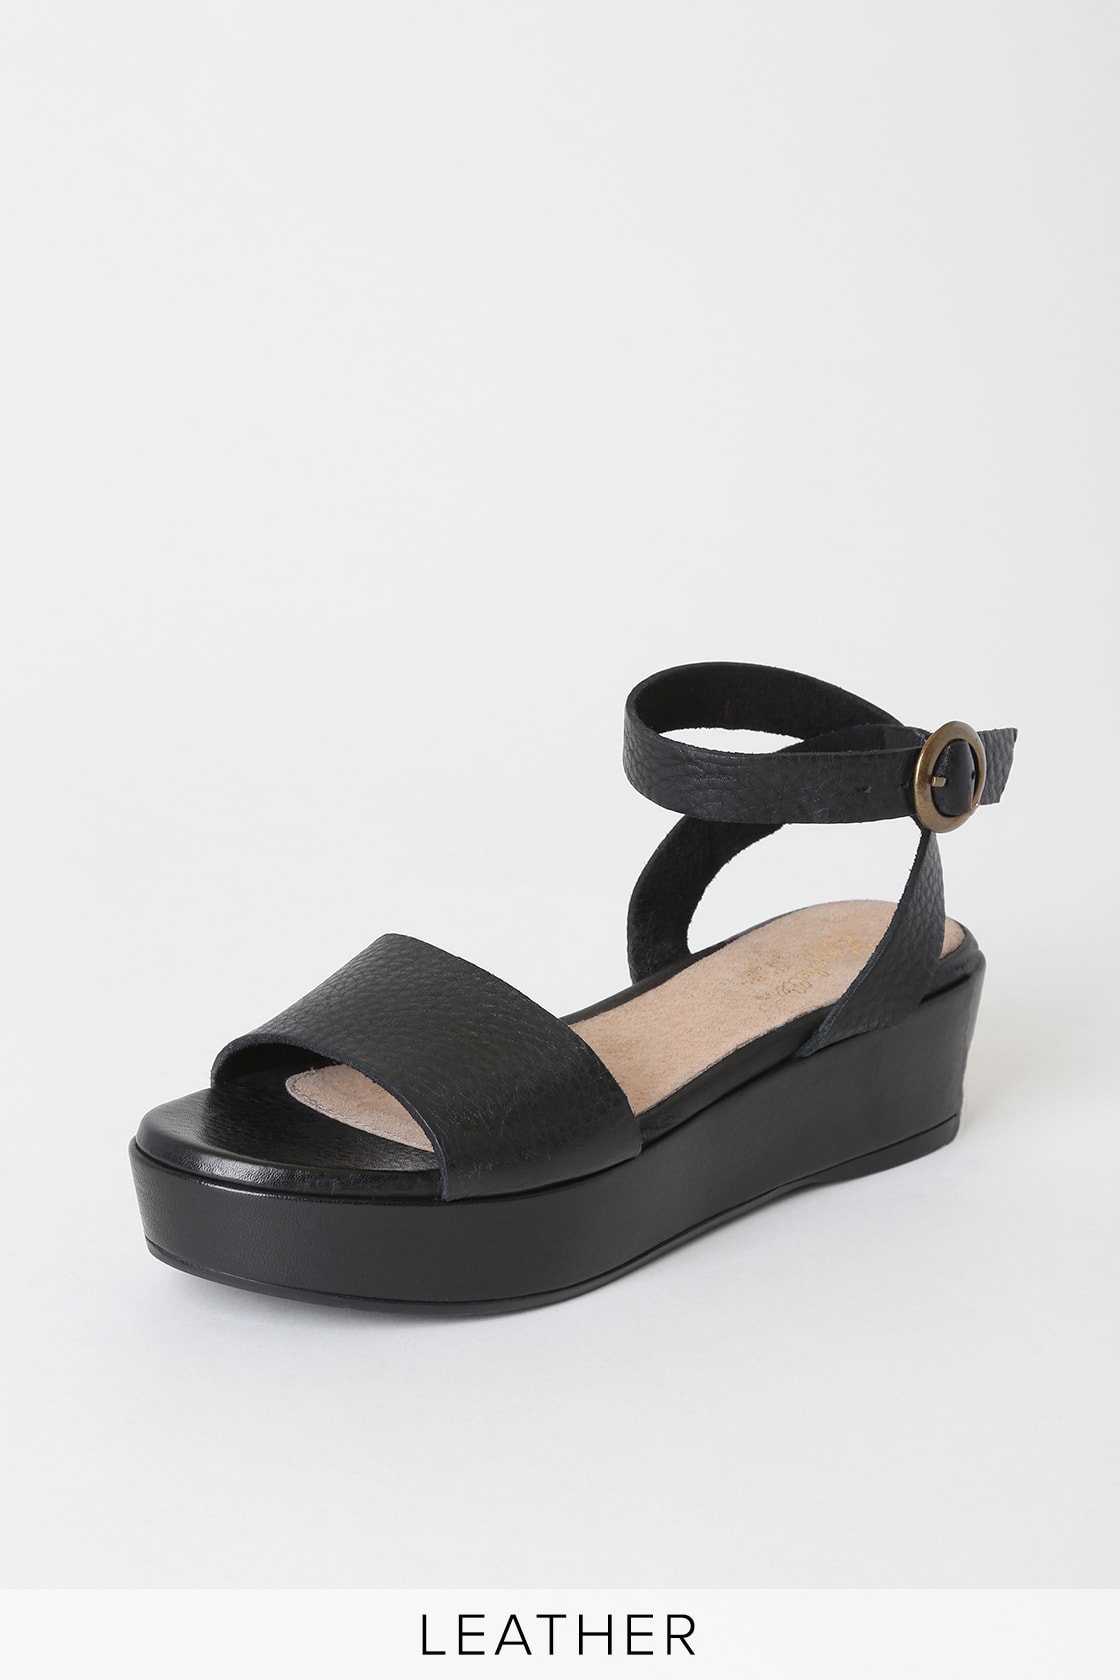 Seychelles Monogram Sandals - Black Leather Flatforms - Sandals - Lulus